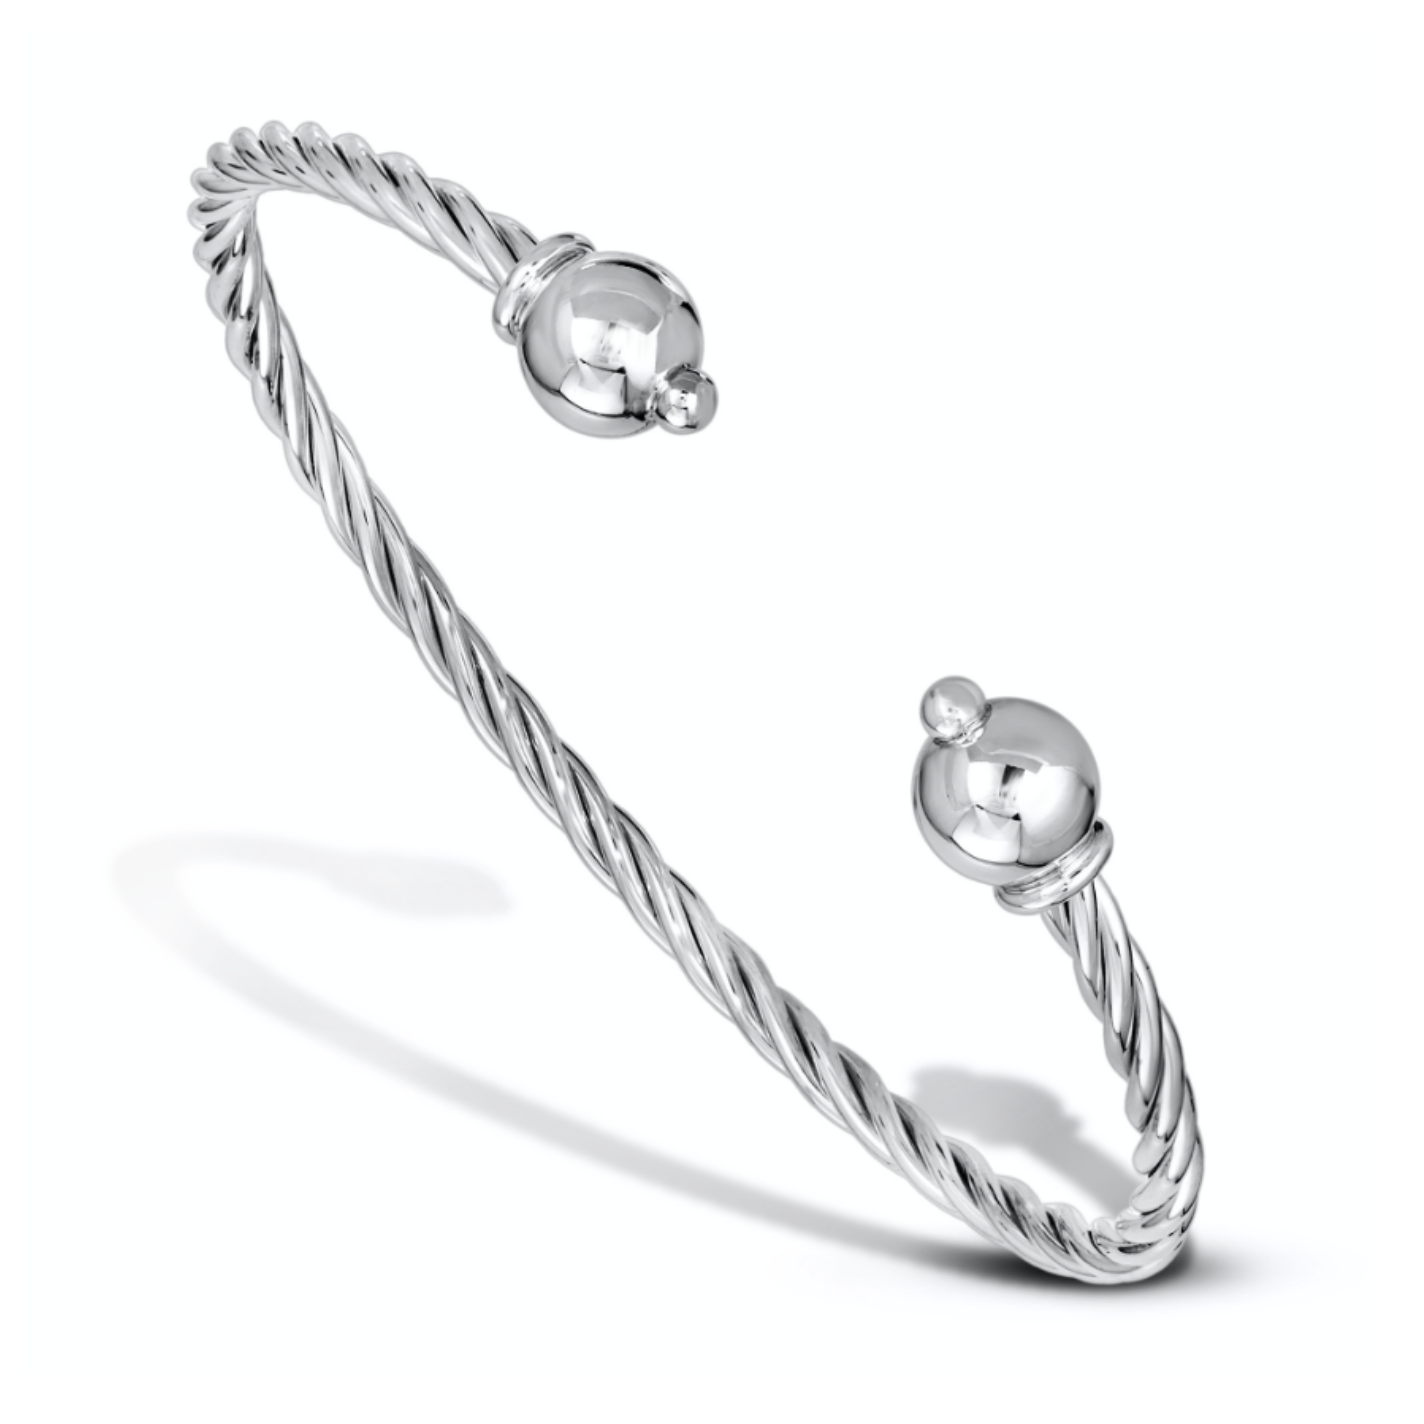 Silver cuff bracelet has braided style - One size - VY Jewelry